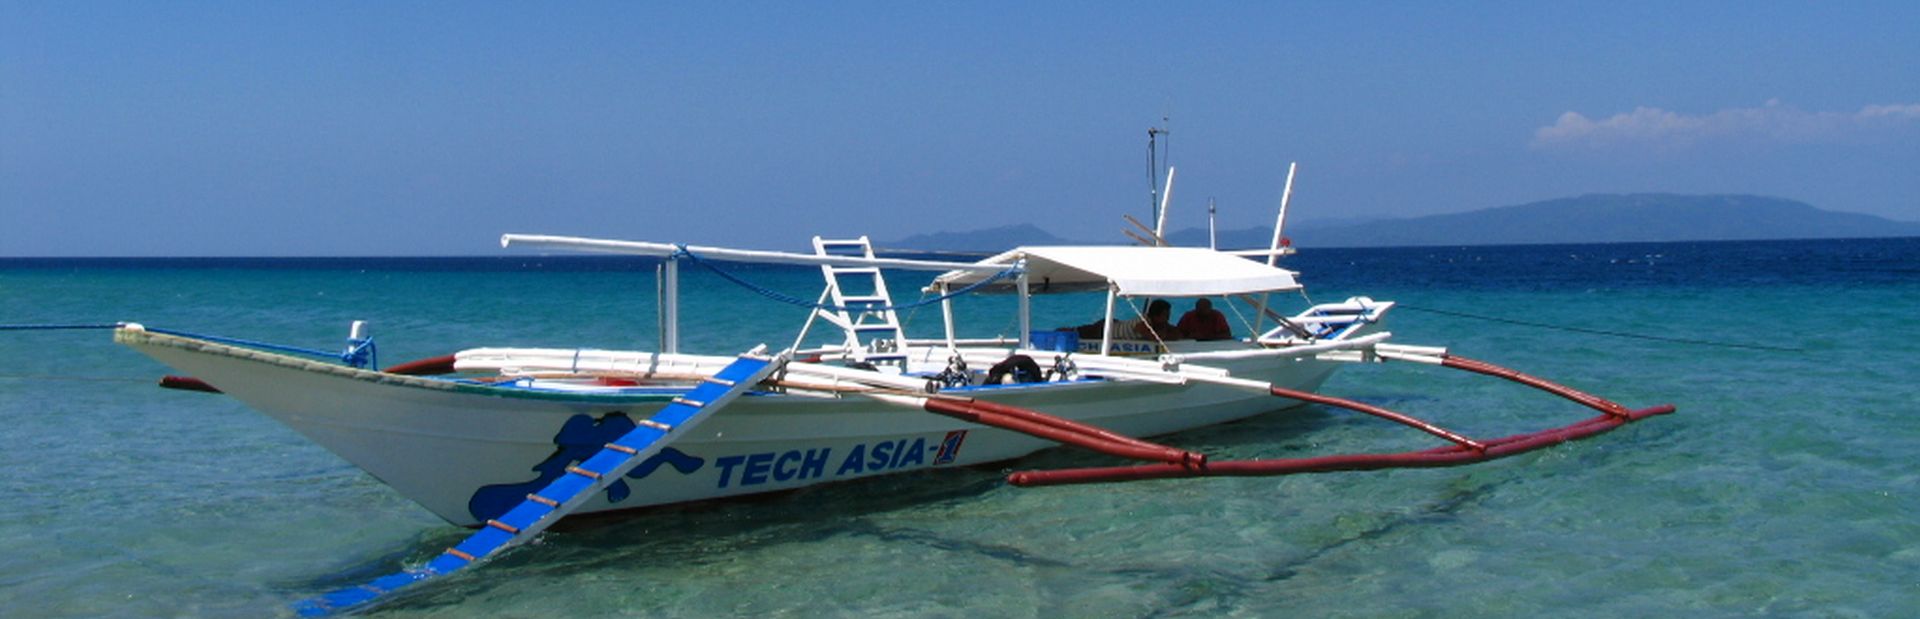 Tech Asia Boat